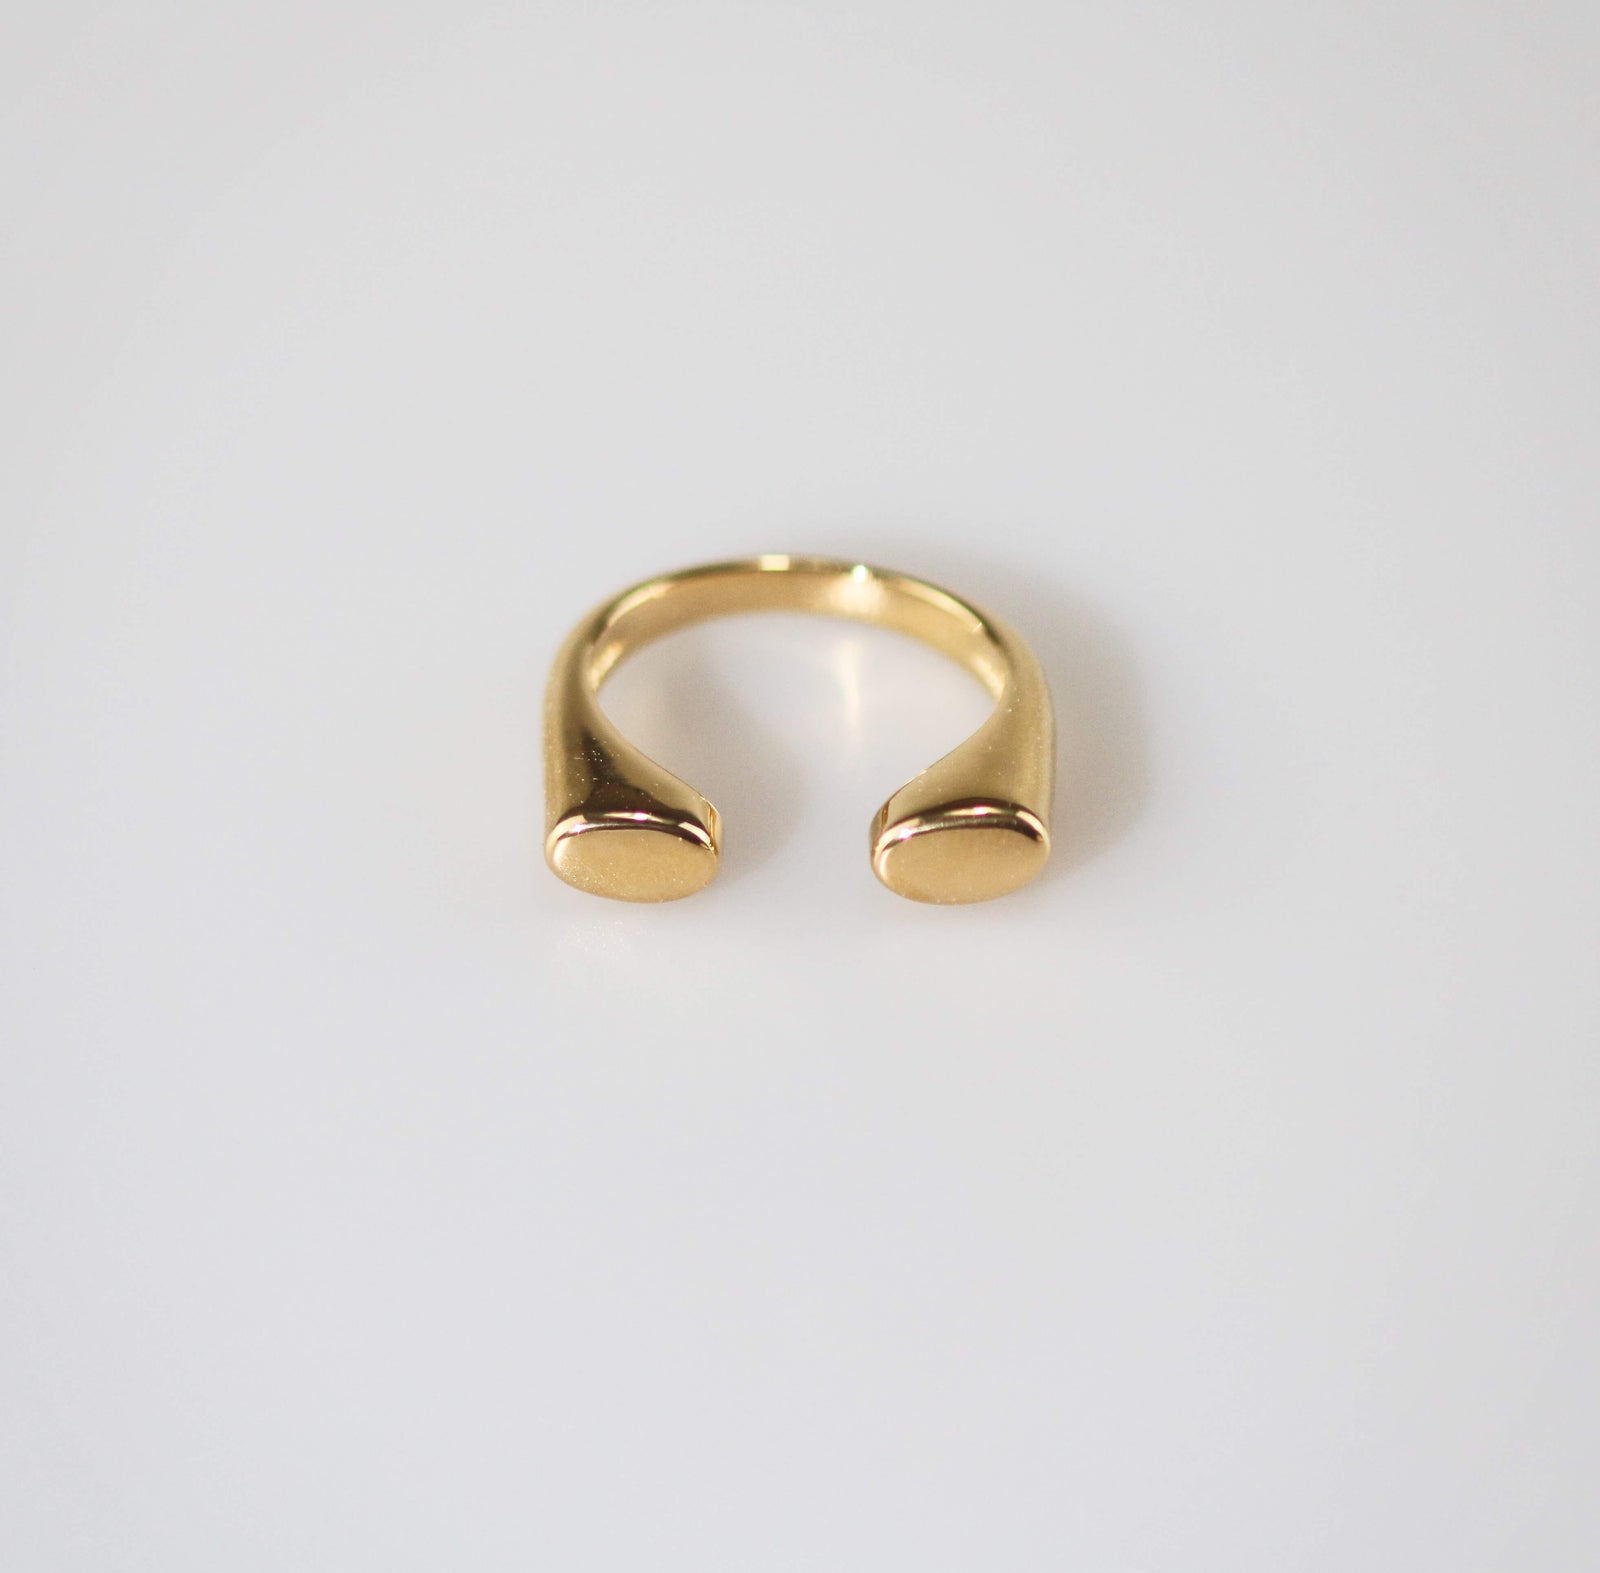 Meideya Jewelry U shaped signet ring